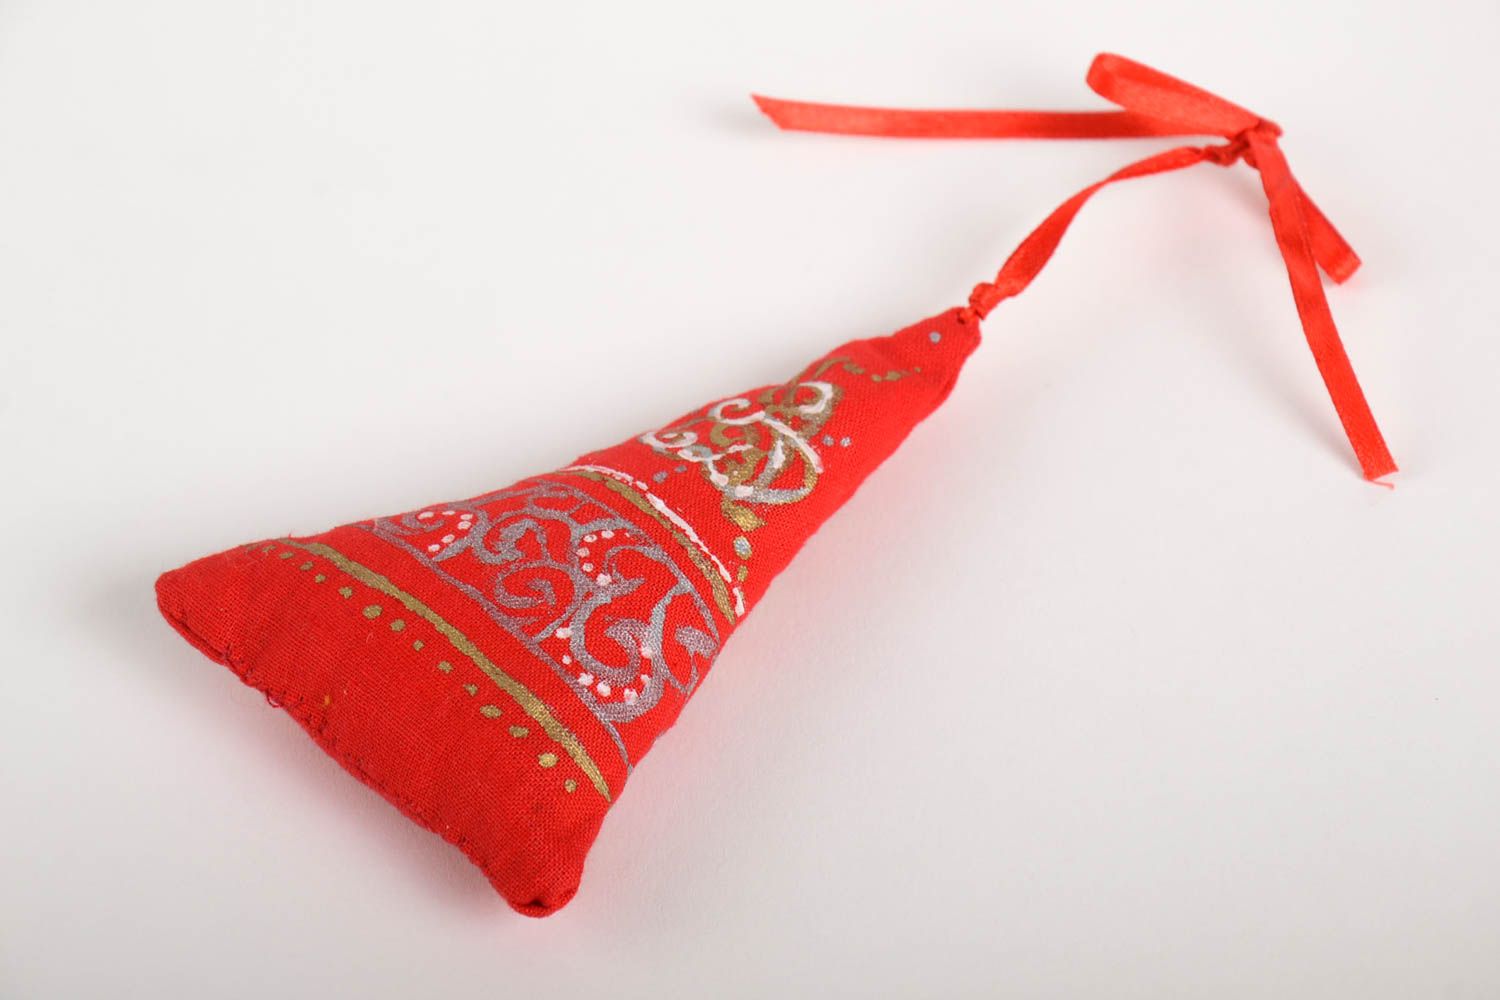 Handmade soft toy Christmas tree decor souvenir ideas for decorative use only photo 1